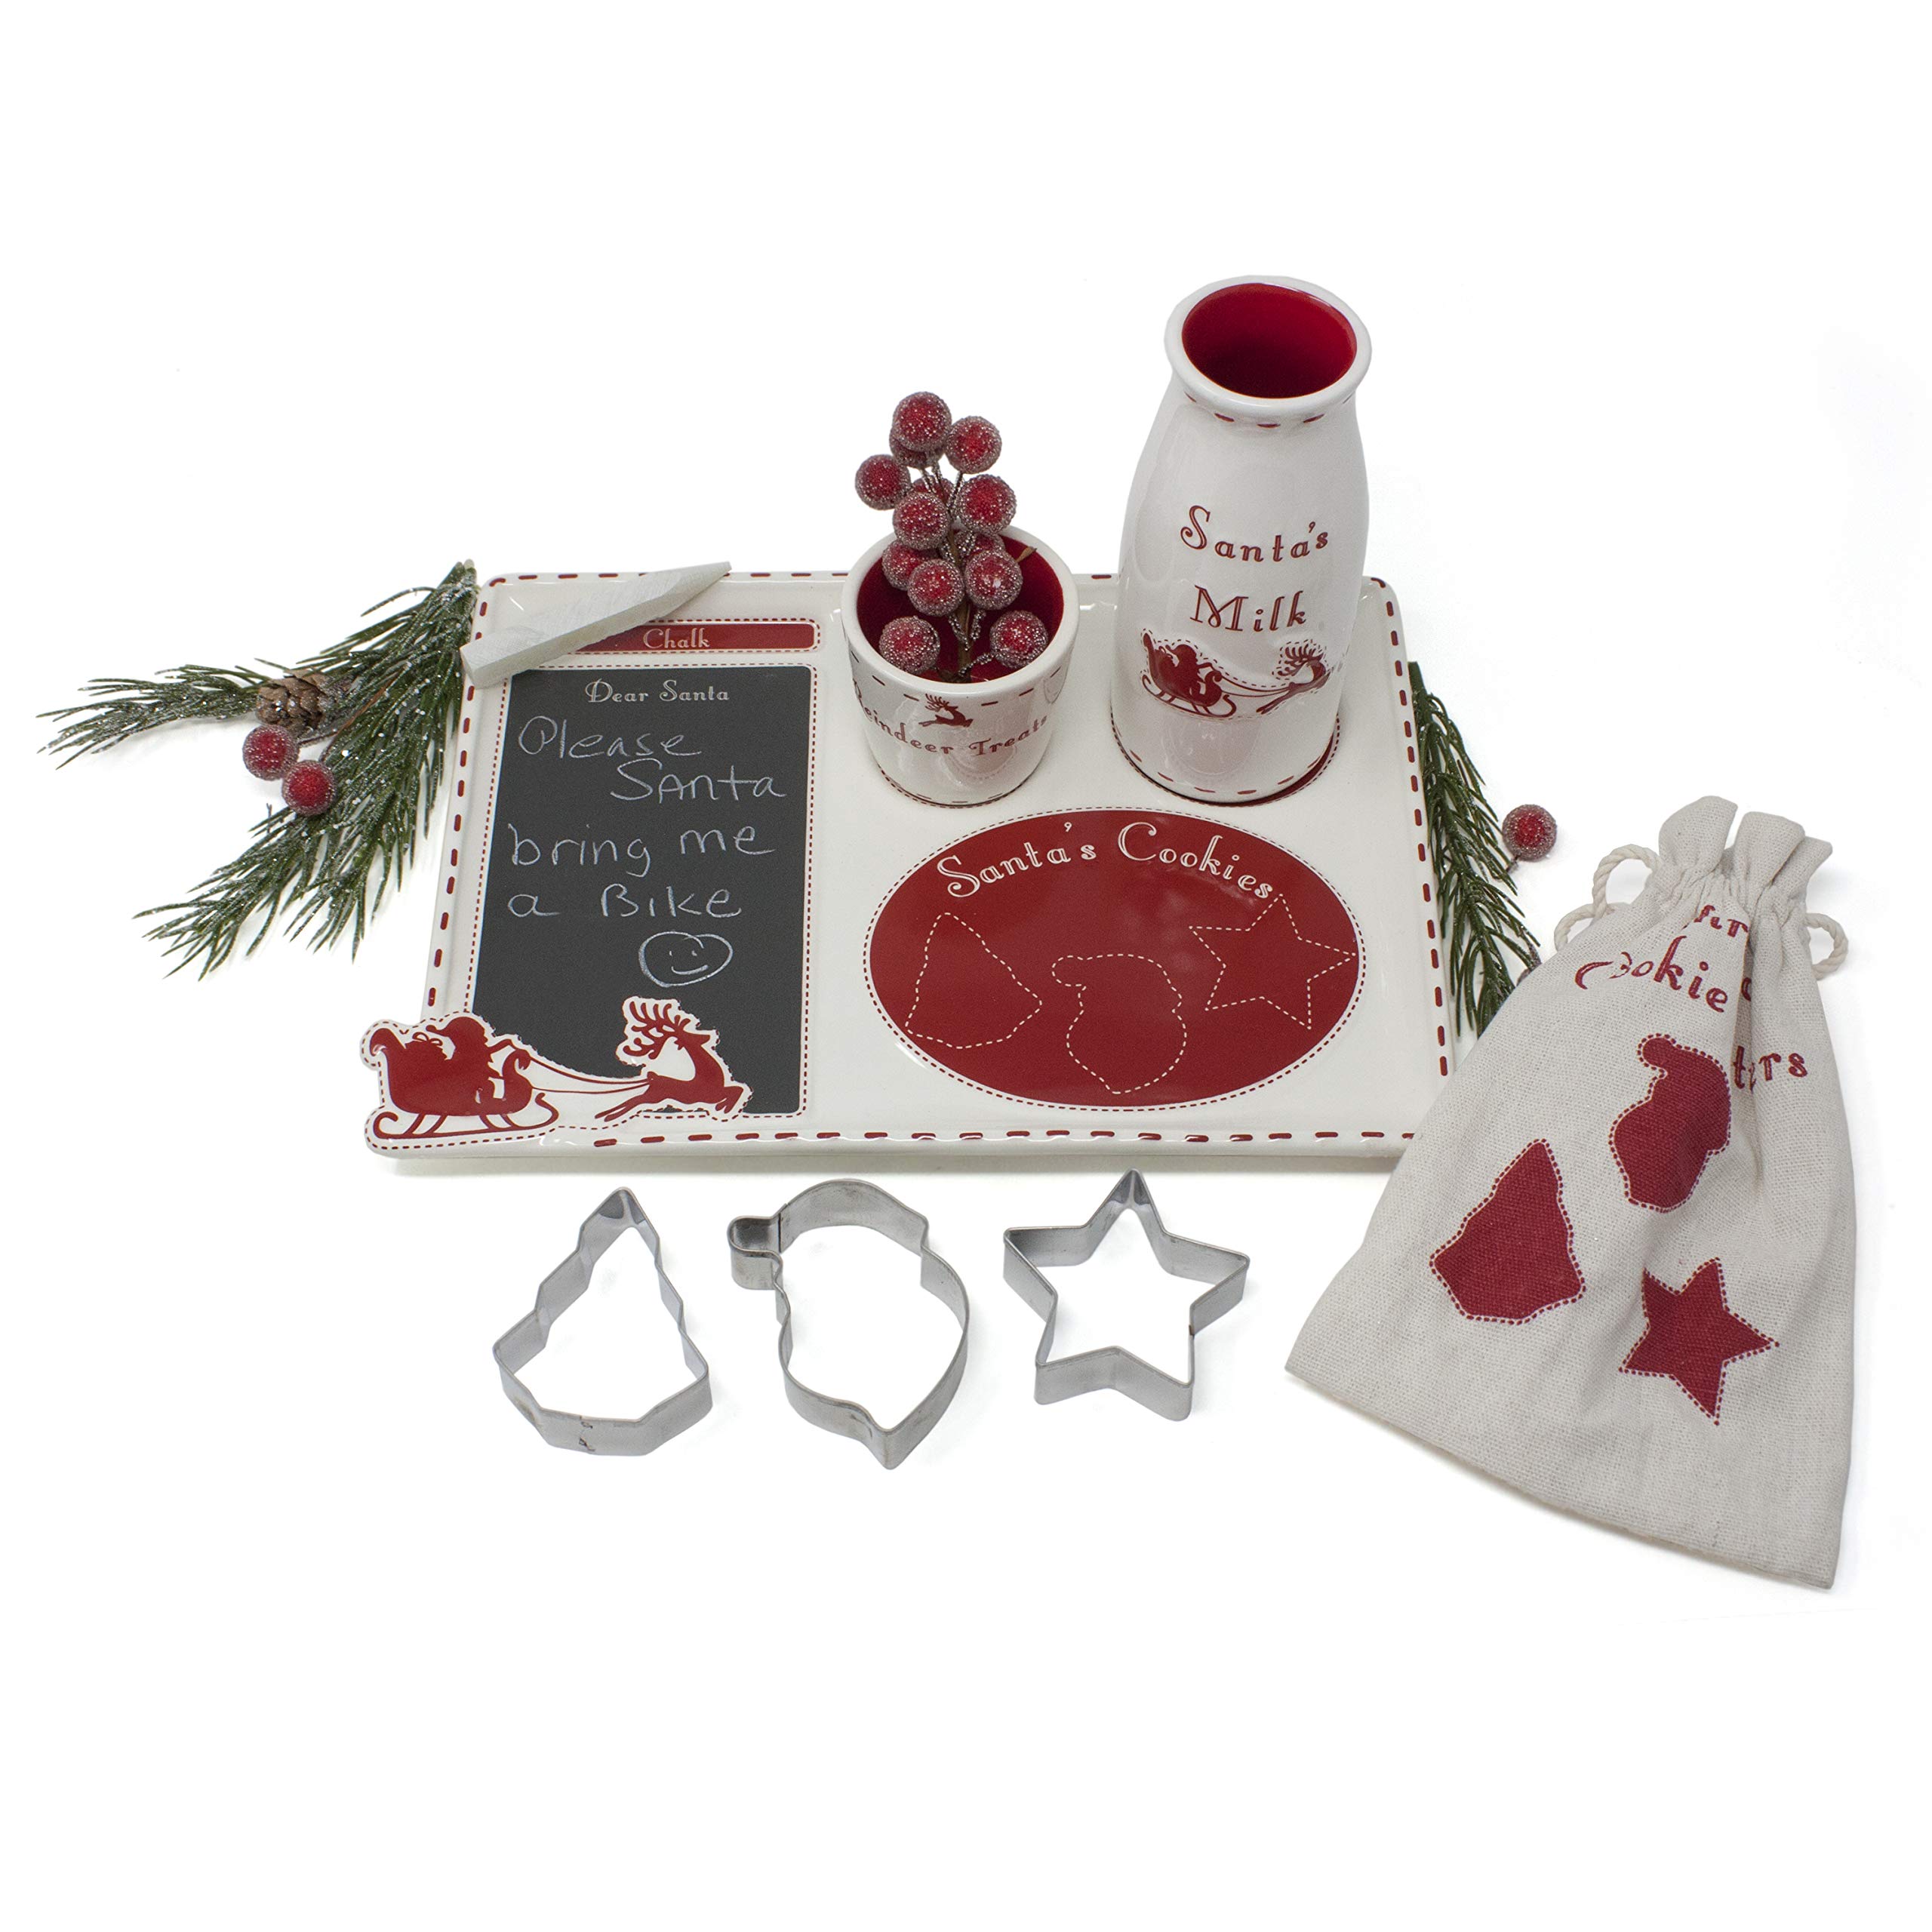 Child to Cherish Santa's Message Christmas Plate Set with Cookie Cutters, Santa plate, Santa milk jar, and Reindeer Treat Bowl